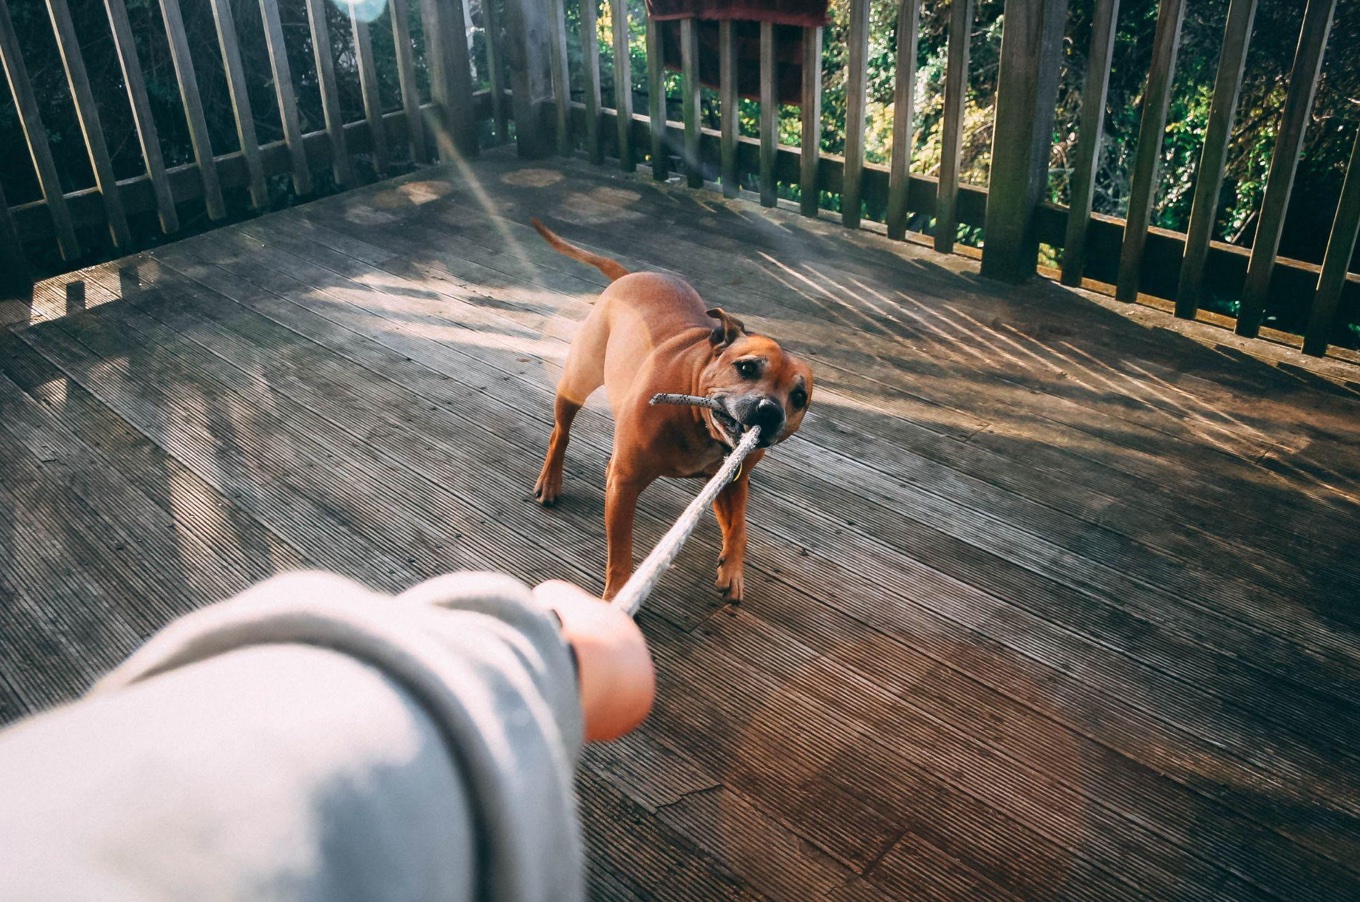 Dog playing tug o' war on patio with human; image by Darcy Lawrey, via Pexels.com